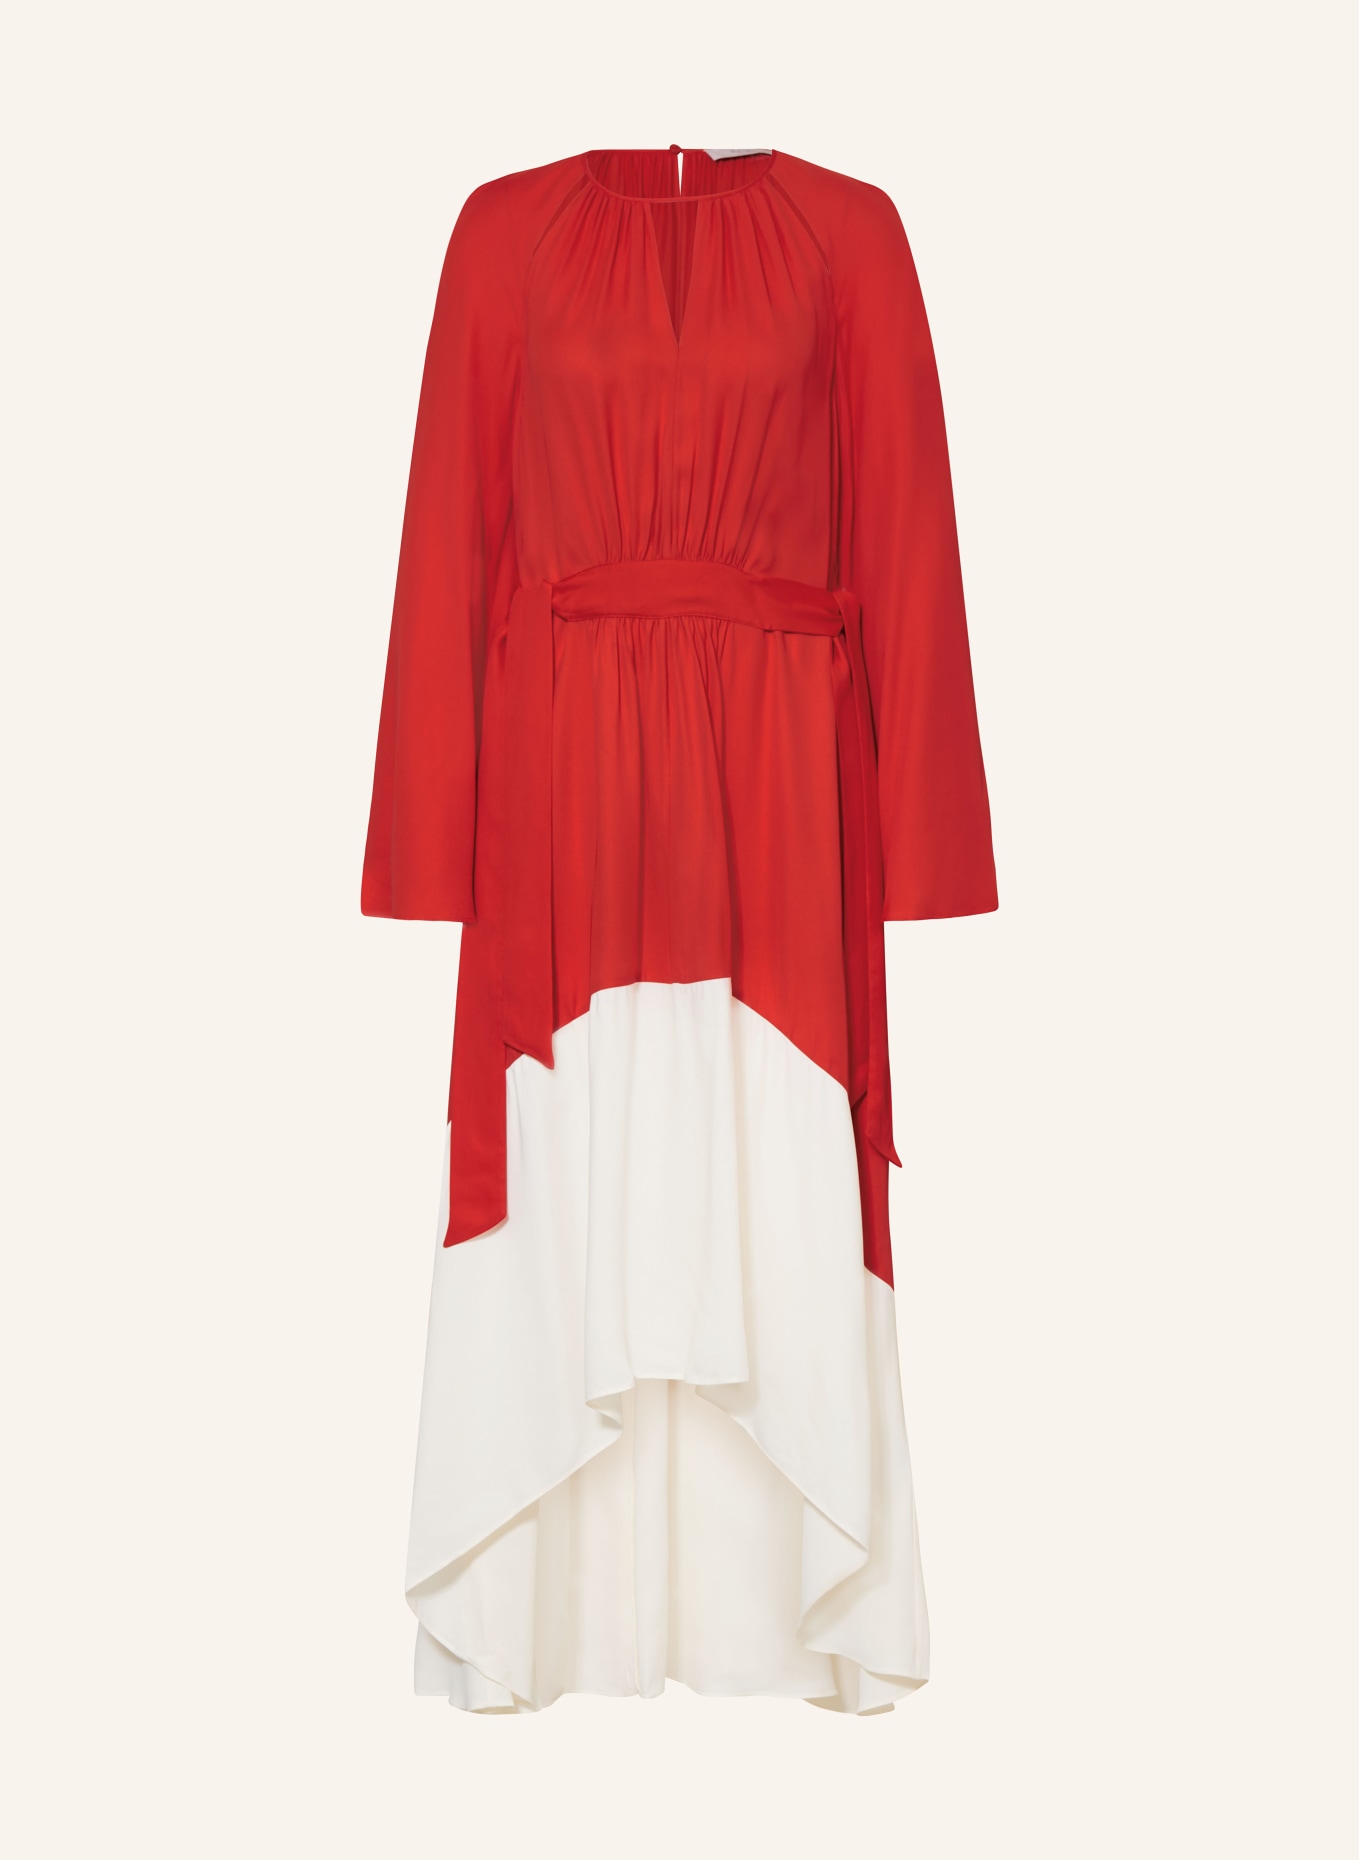 REISS Kleid LUELLA, Farbe: ORANGE/ CREME (Bild 1)